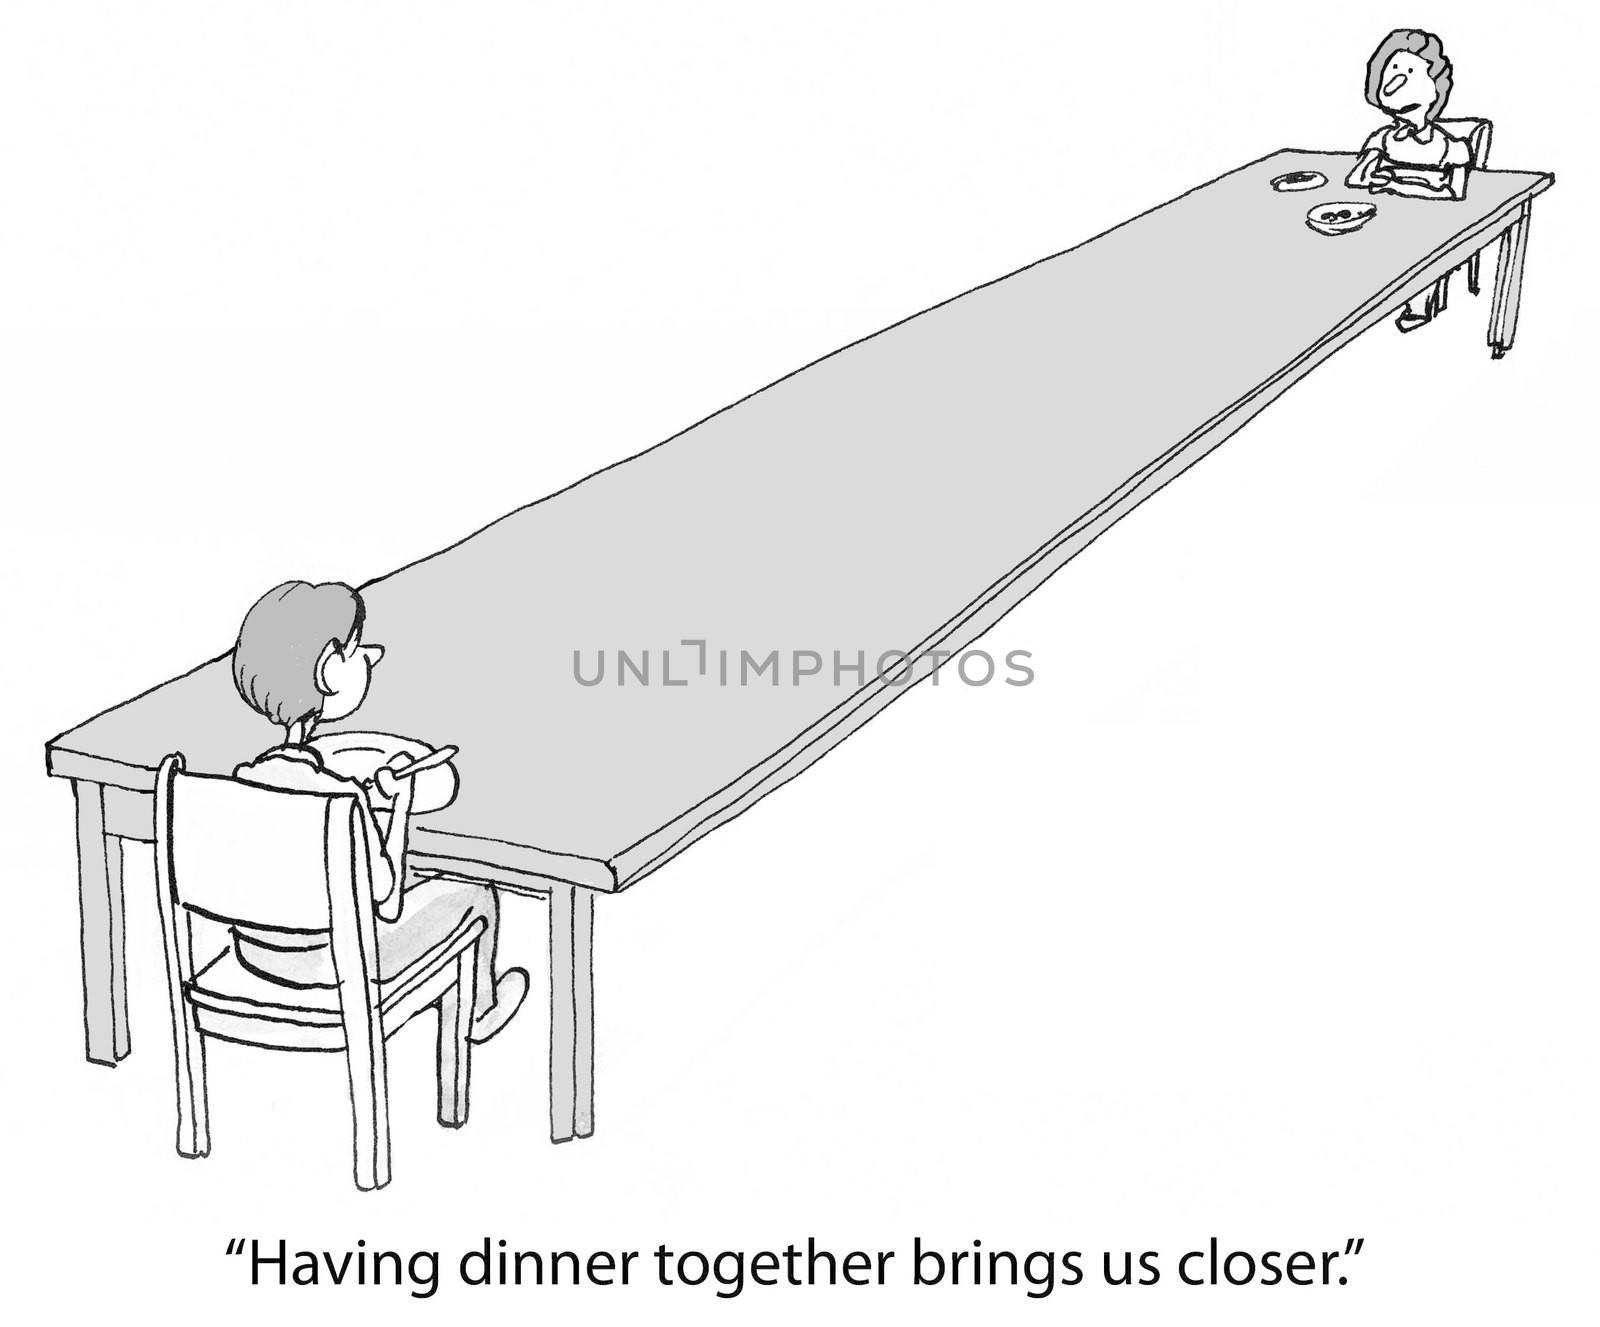 Dinner Together by andrewgenn